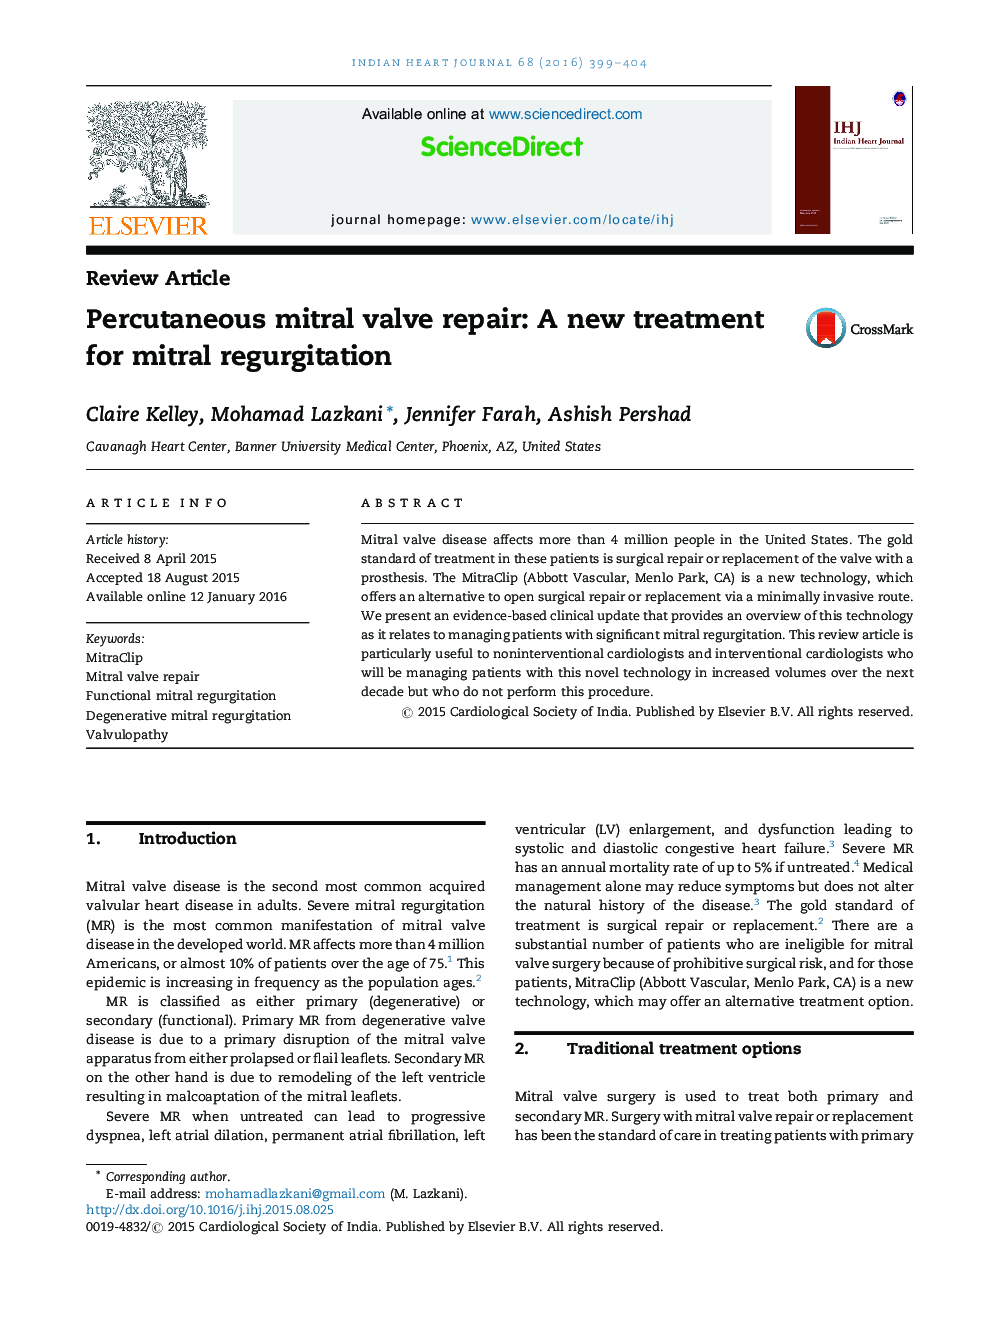 Percutaneous mitral valve repair: A new treatment for mitral regurgitation